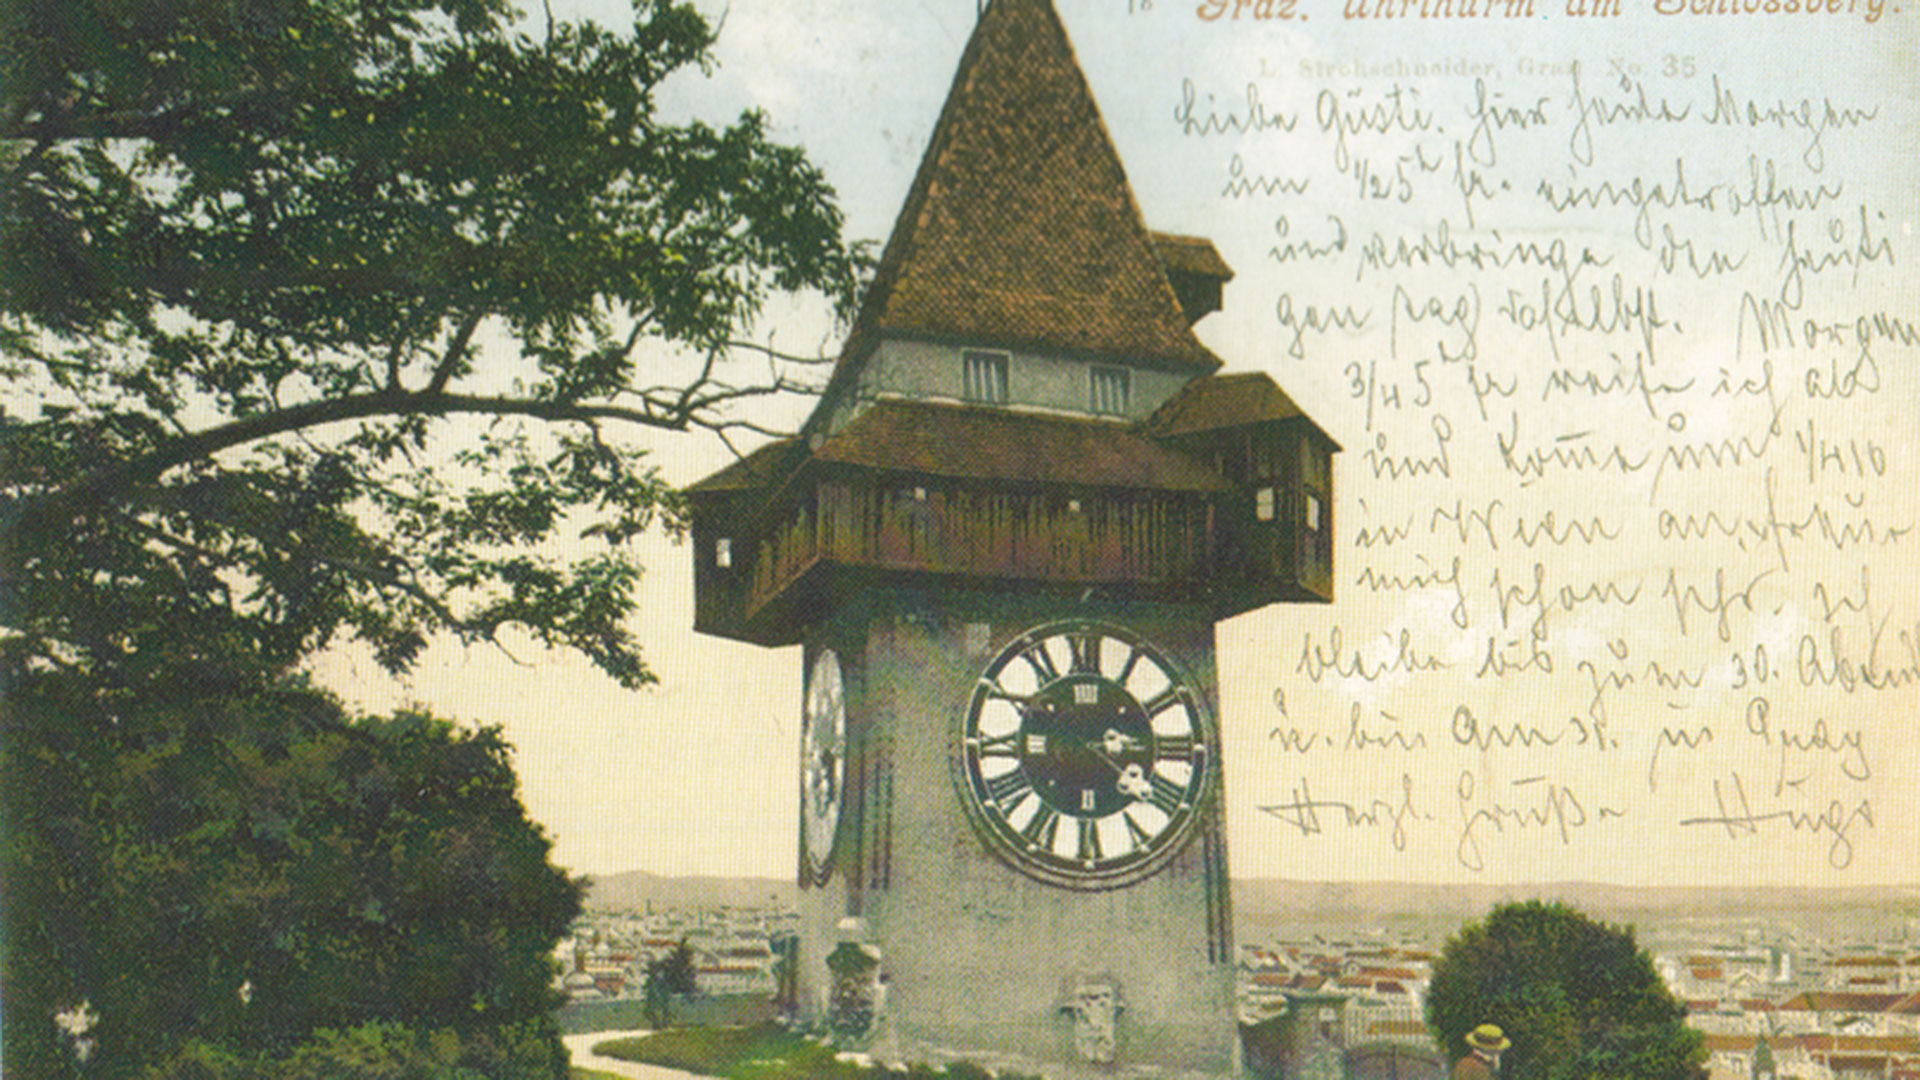 Postkarte mit dem Grazer Uhrturm